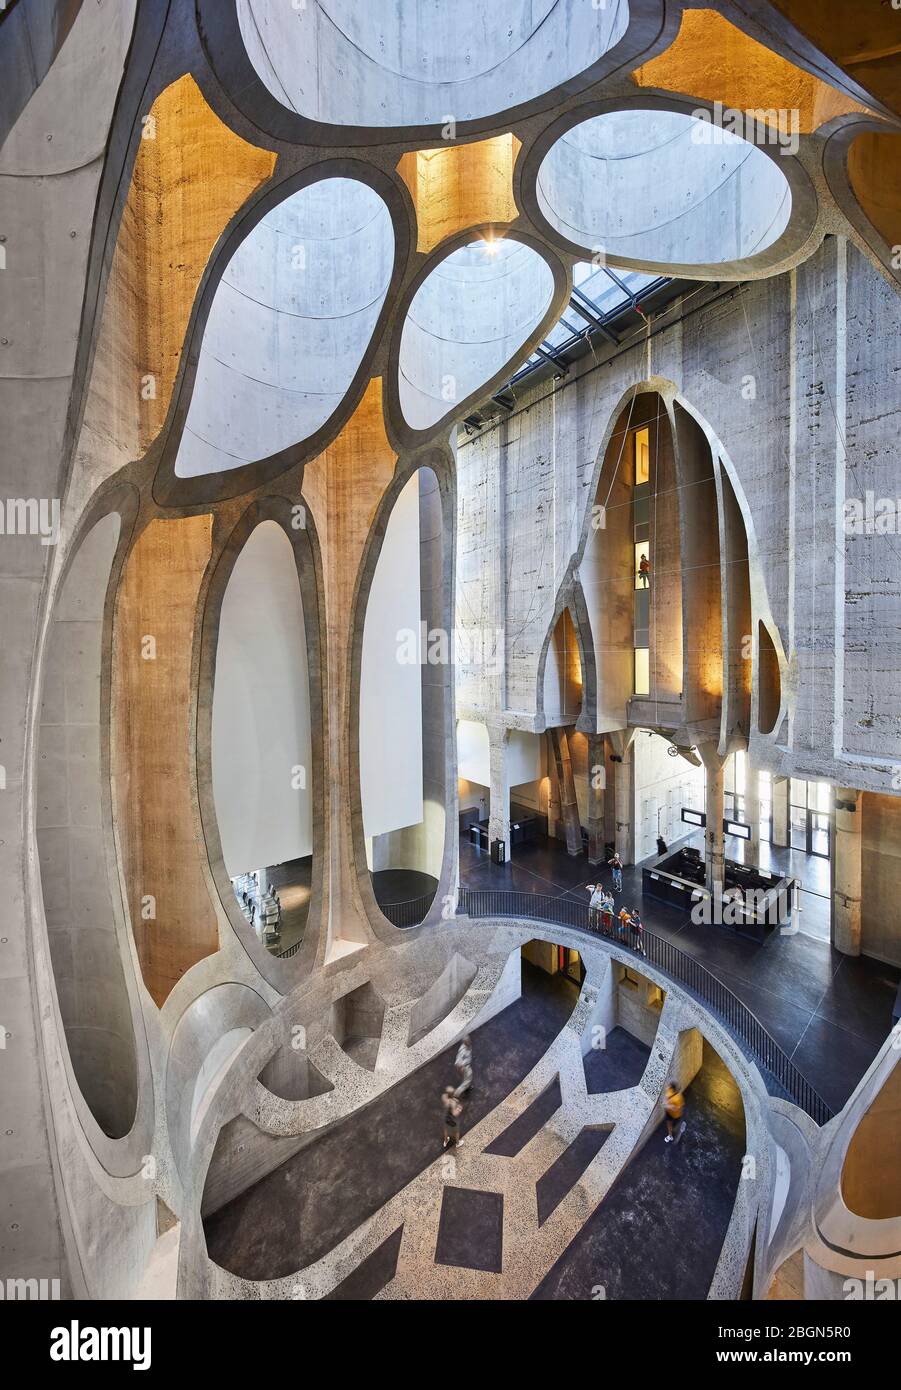 Central atrium with concrete tubes exposing structure. Zeitz MOCAA, Cape Town, South Africa. Architect: Heatherwick Studio, 2017. Stock Photo